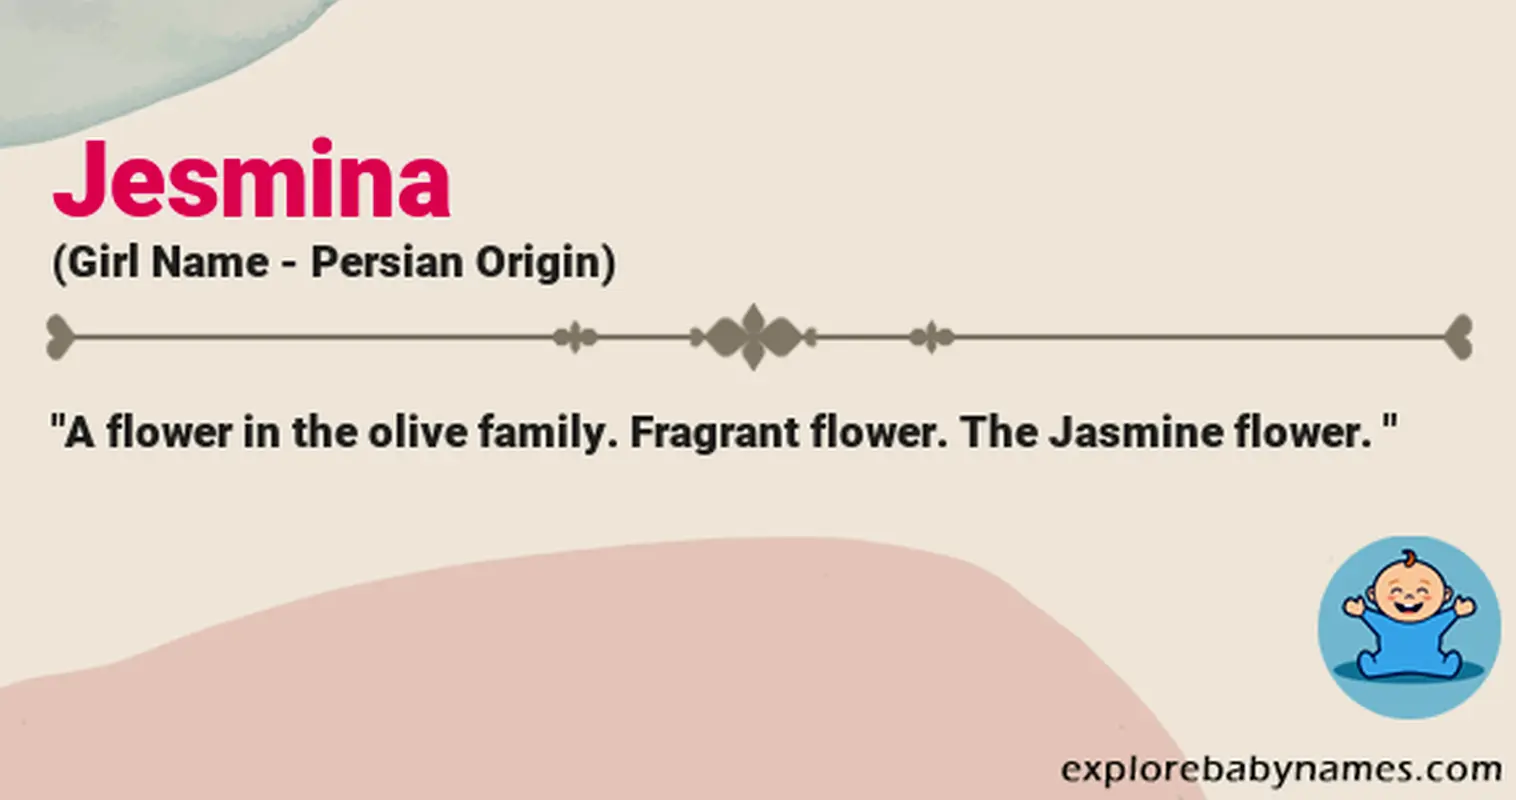 Meaning of Jesmina